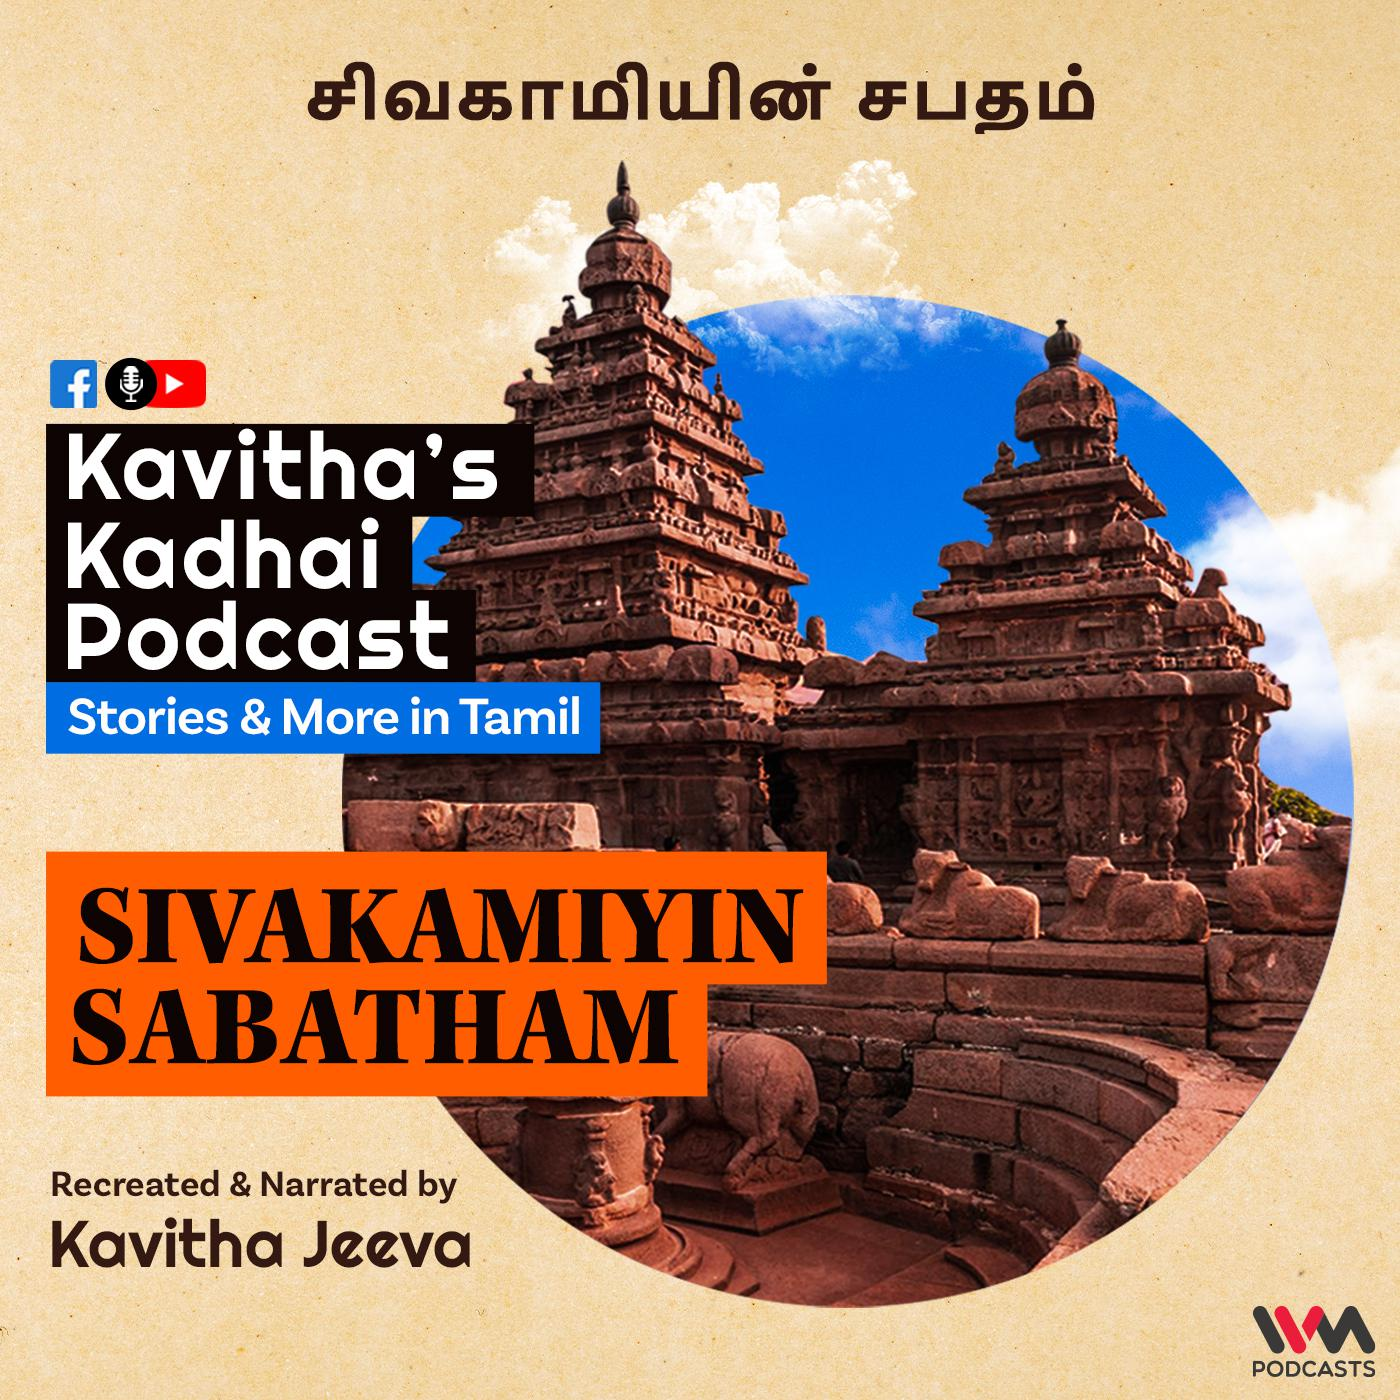 KadhaiPodcast's Sivakamiyin Sabatham with Kavitha Jeeva - Episode #125